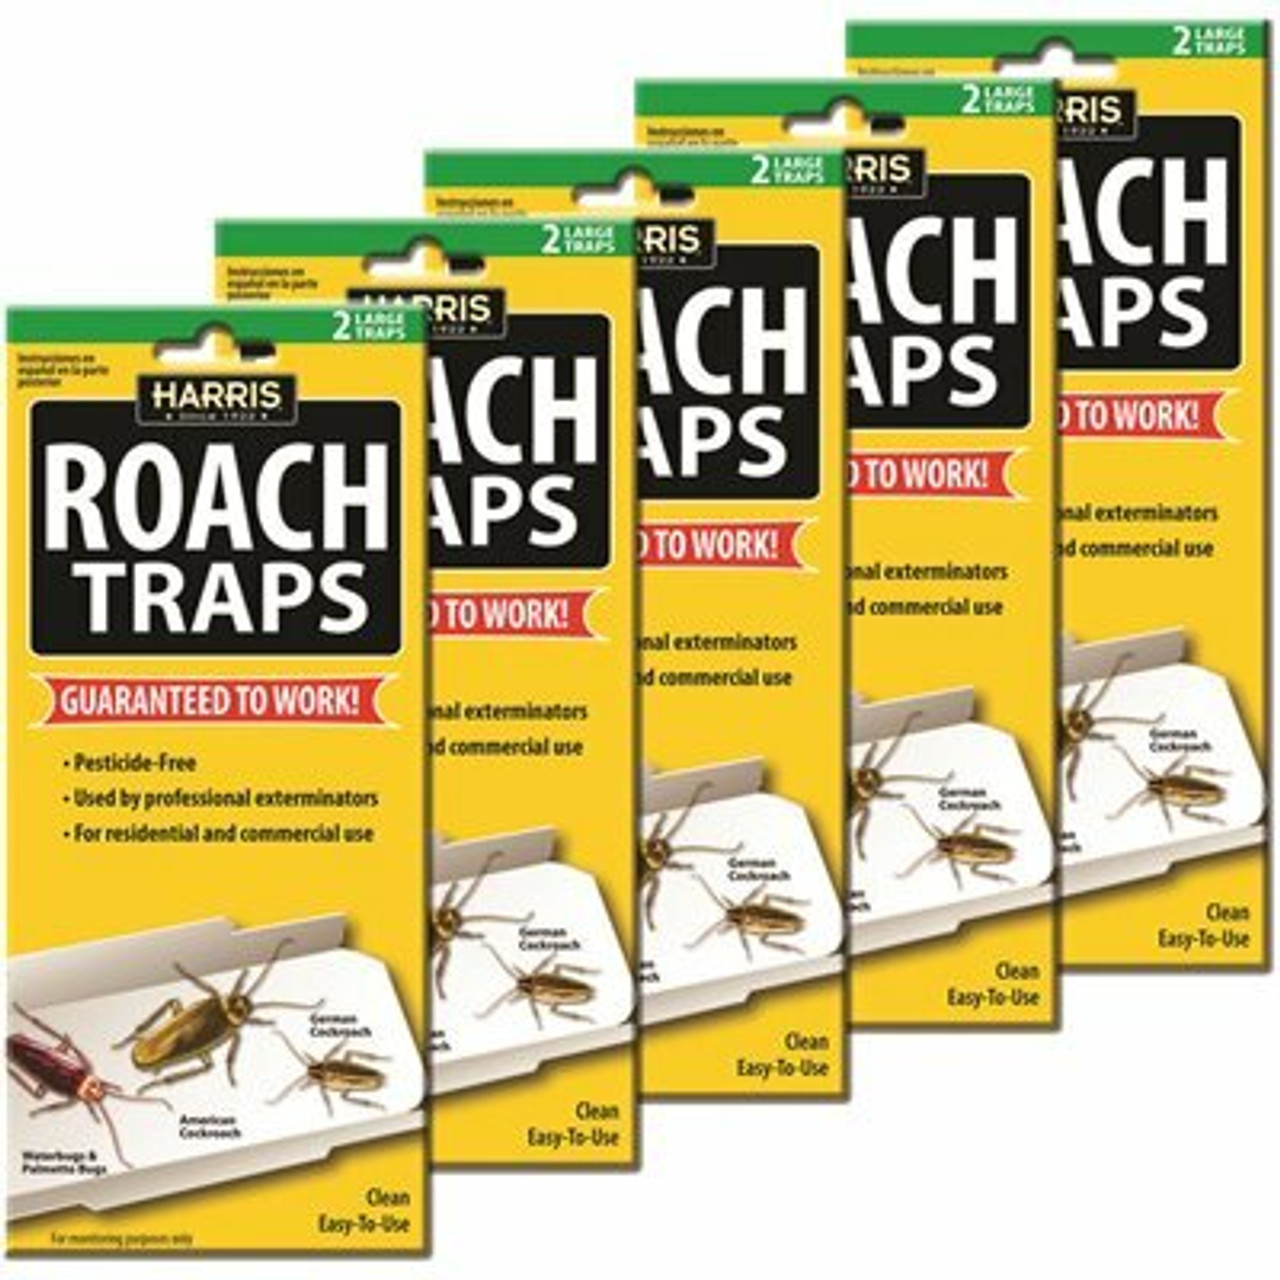 Harris Roach Trap Value Pack